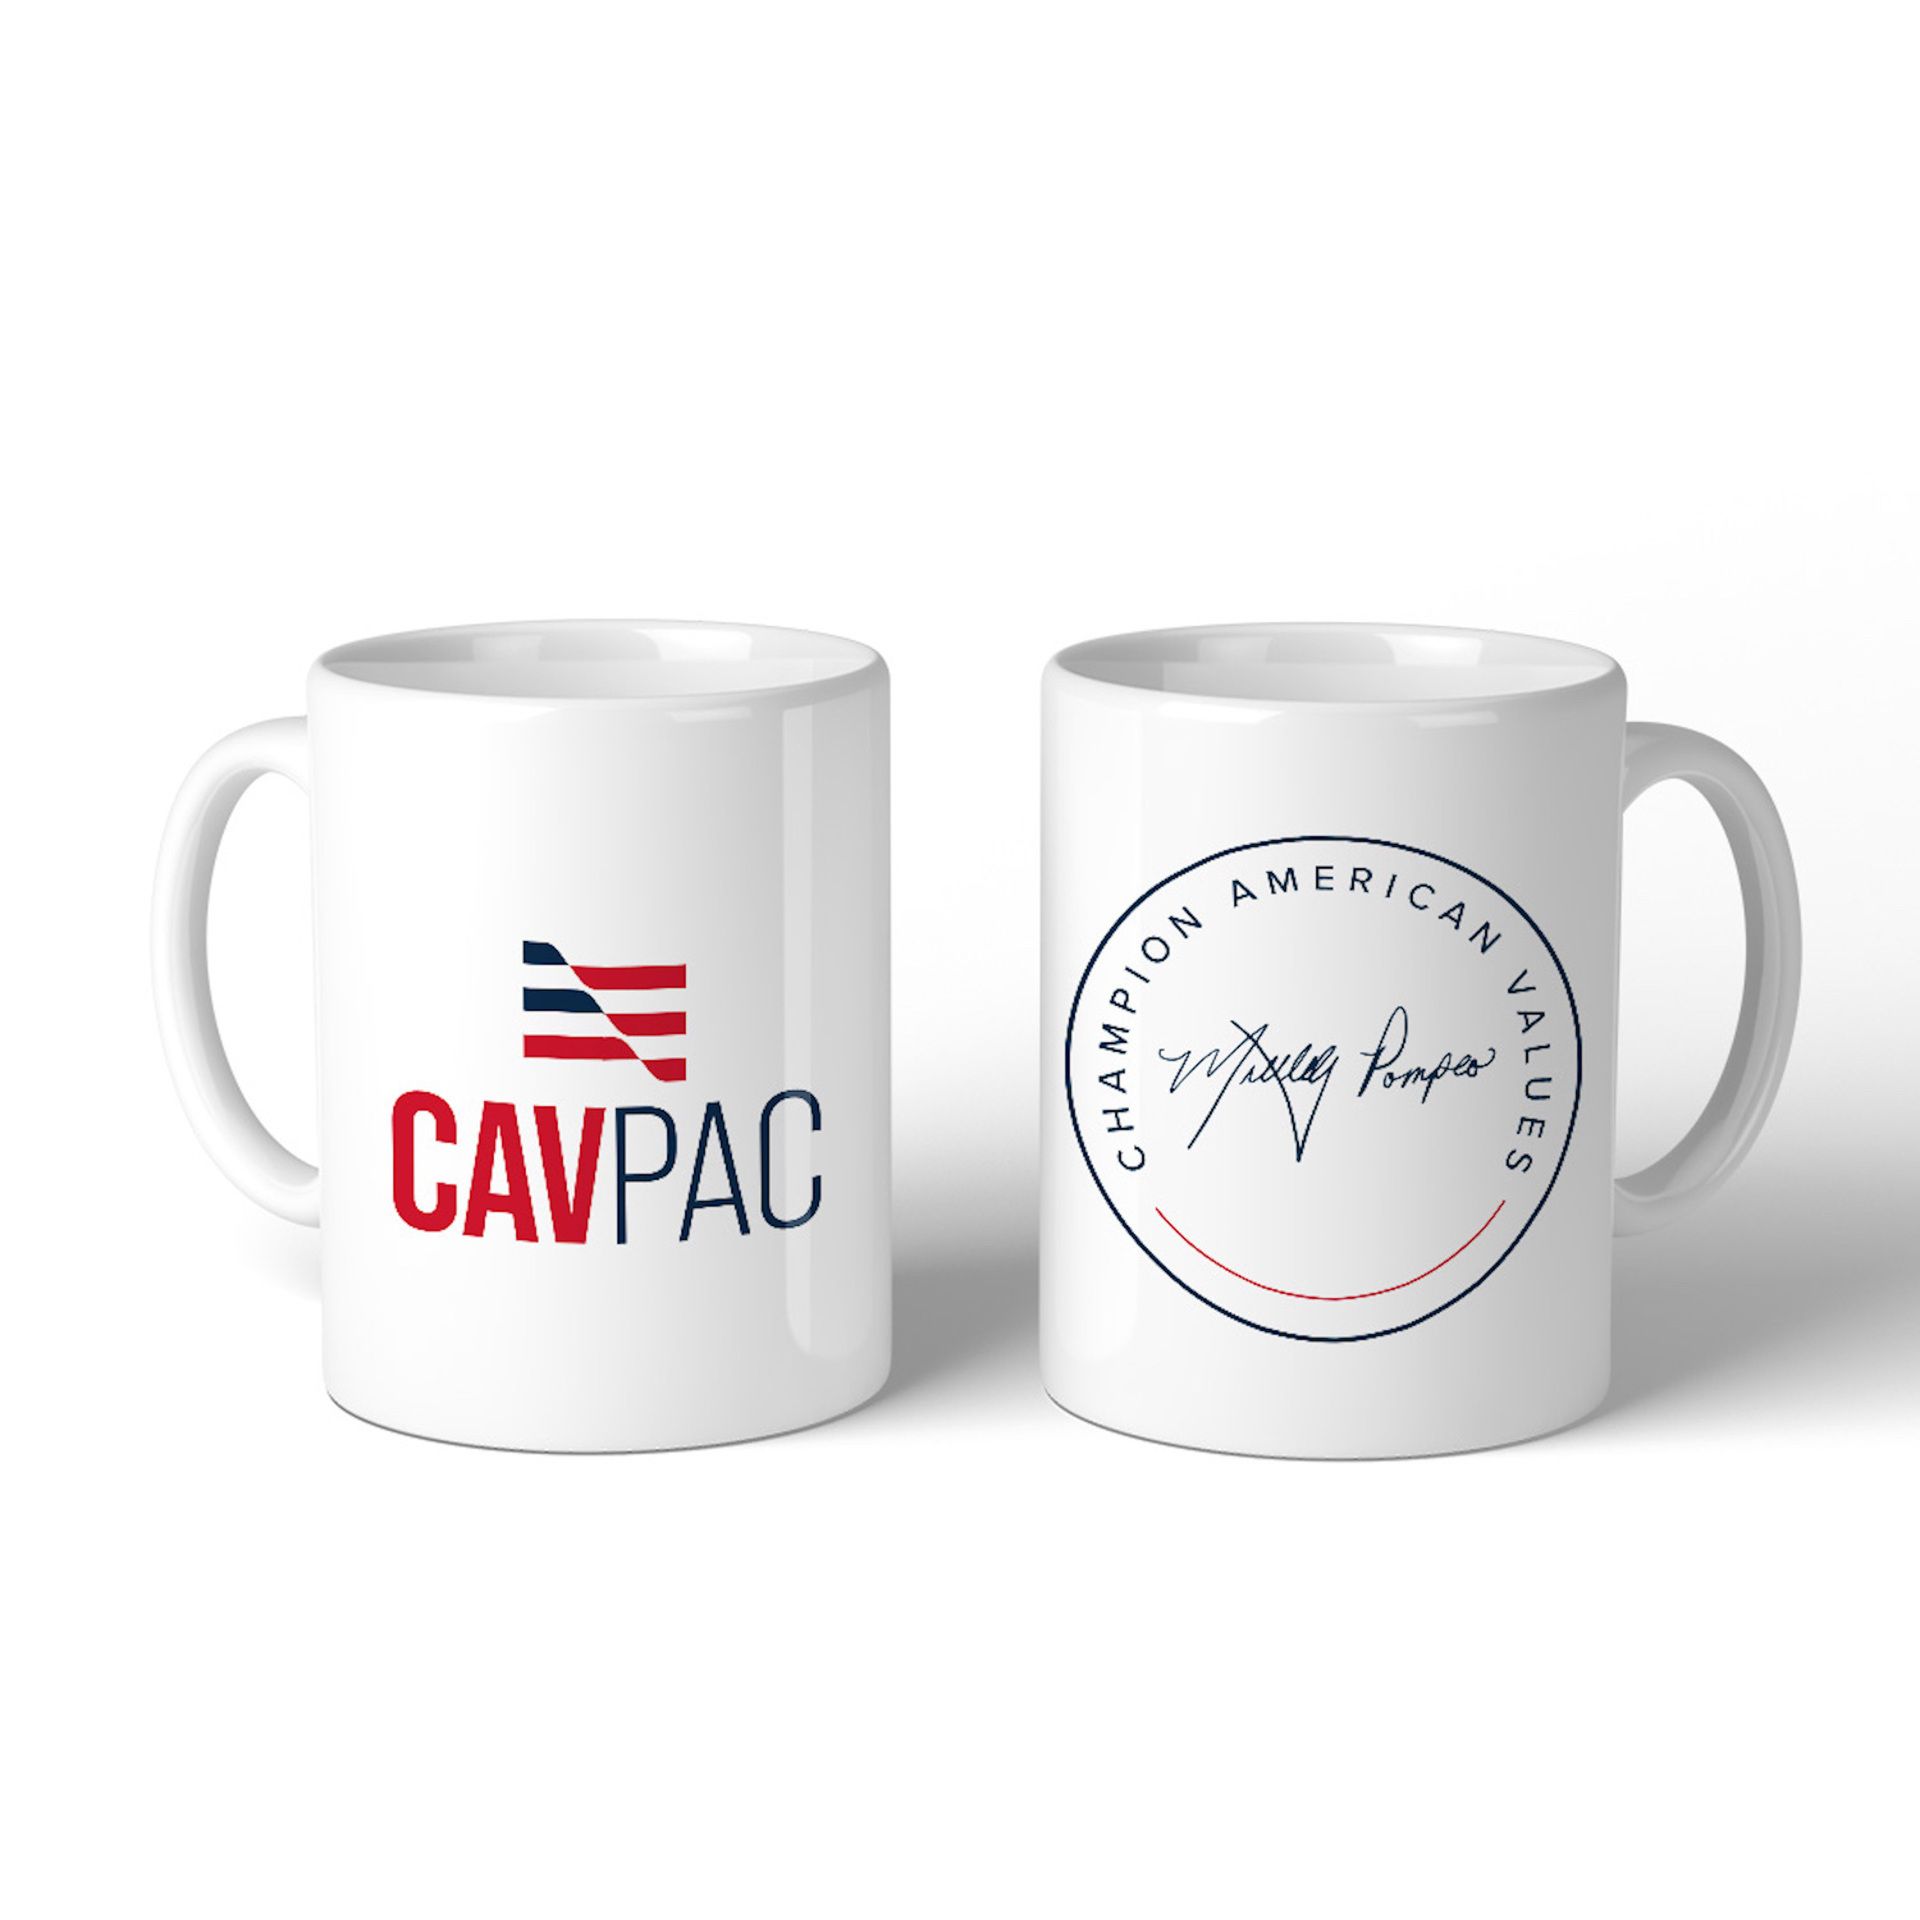 Cavpac social mug 1080x1080 v1